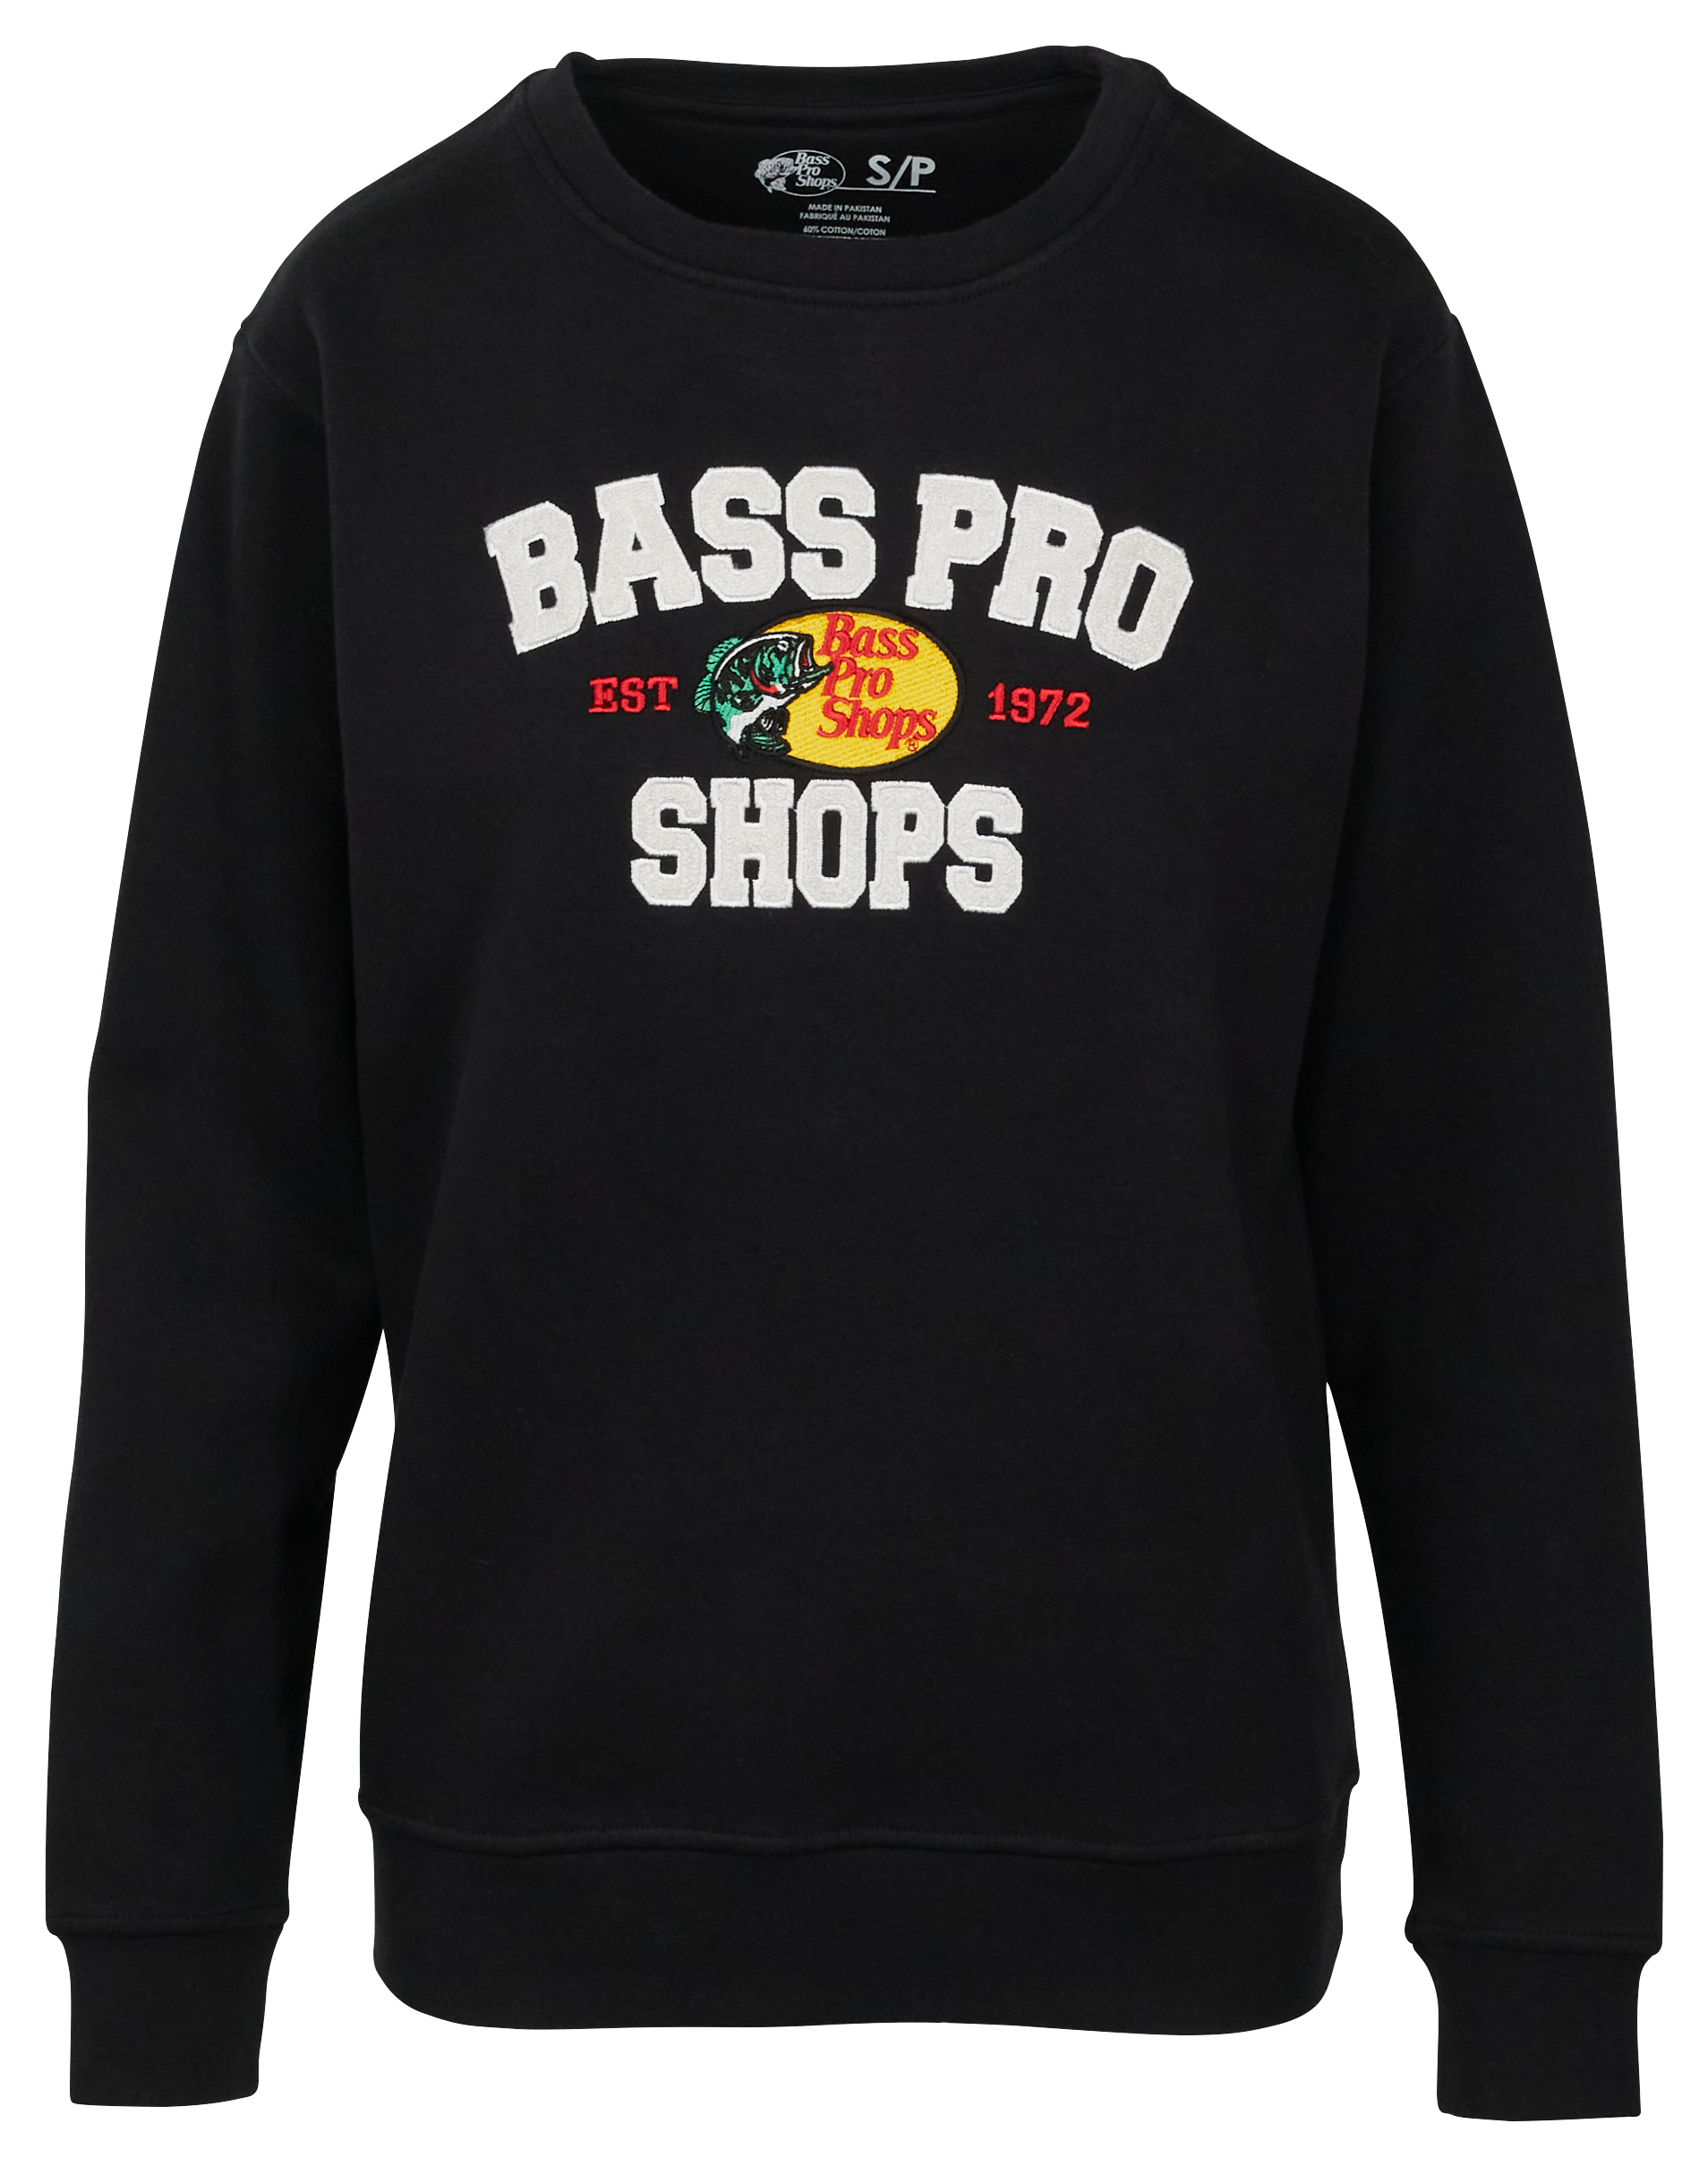 Bass Pro Shops Logo Crew-Neck Long-Sleeve Sweatshirt for Ladies - Onyx - S